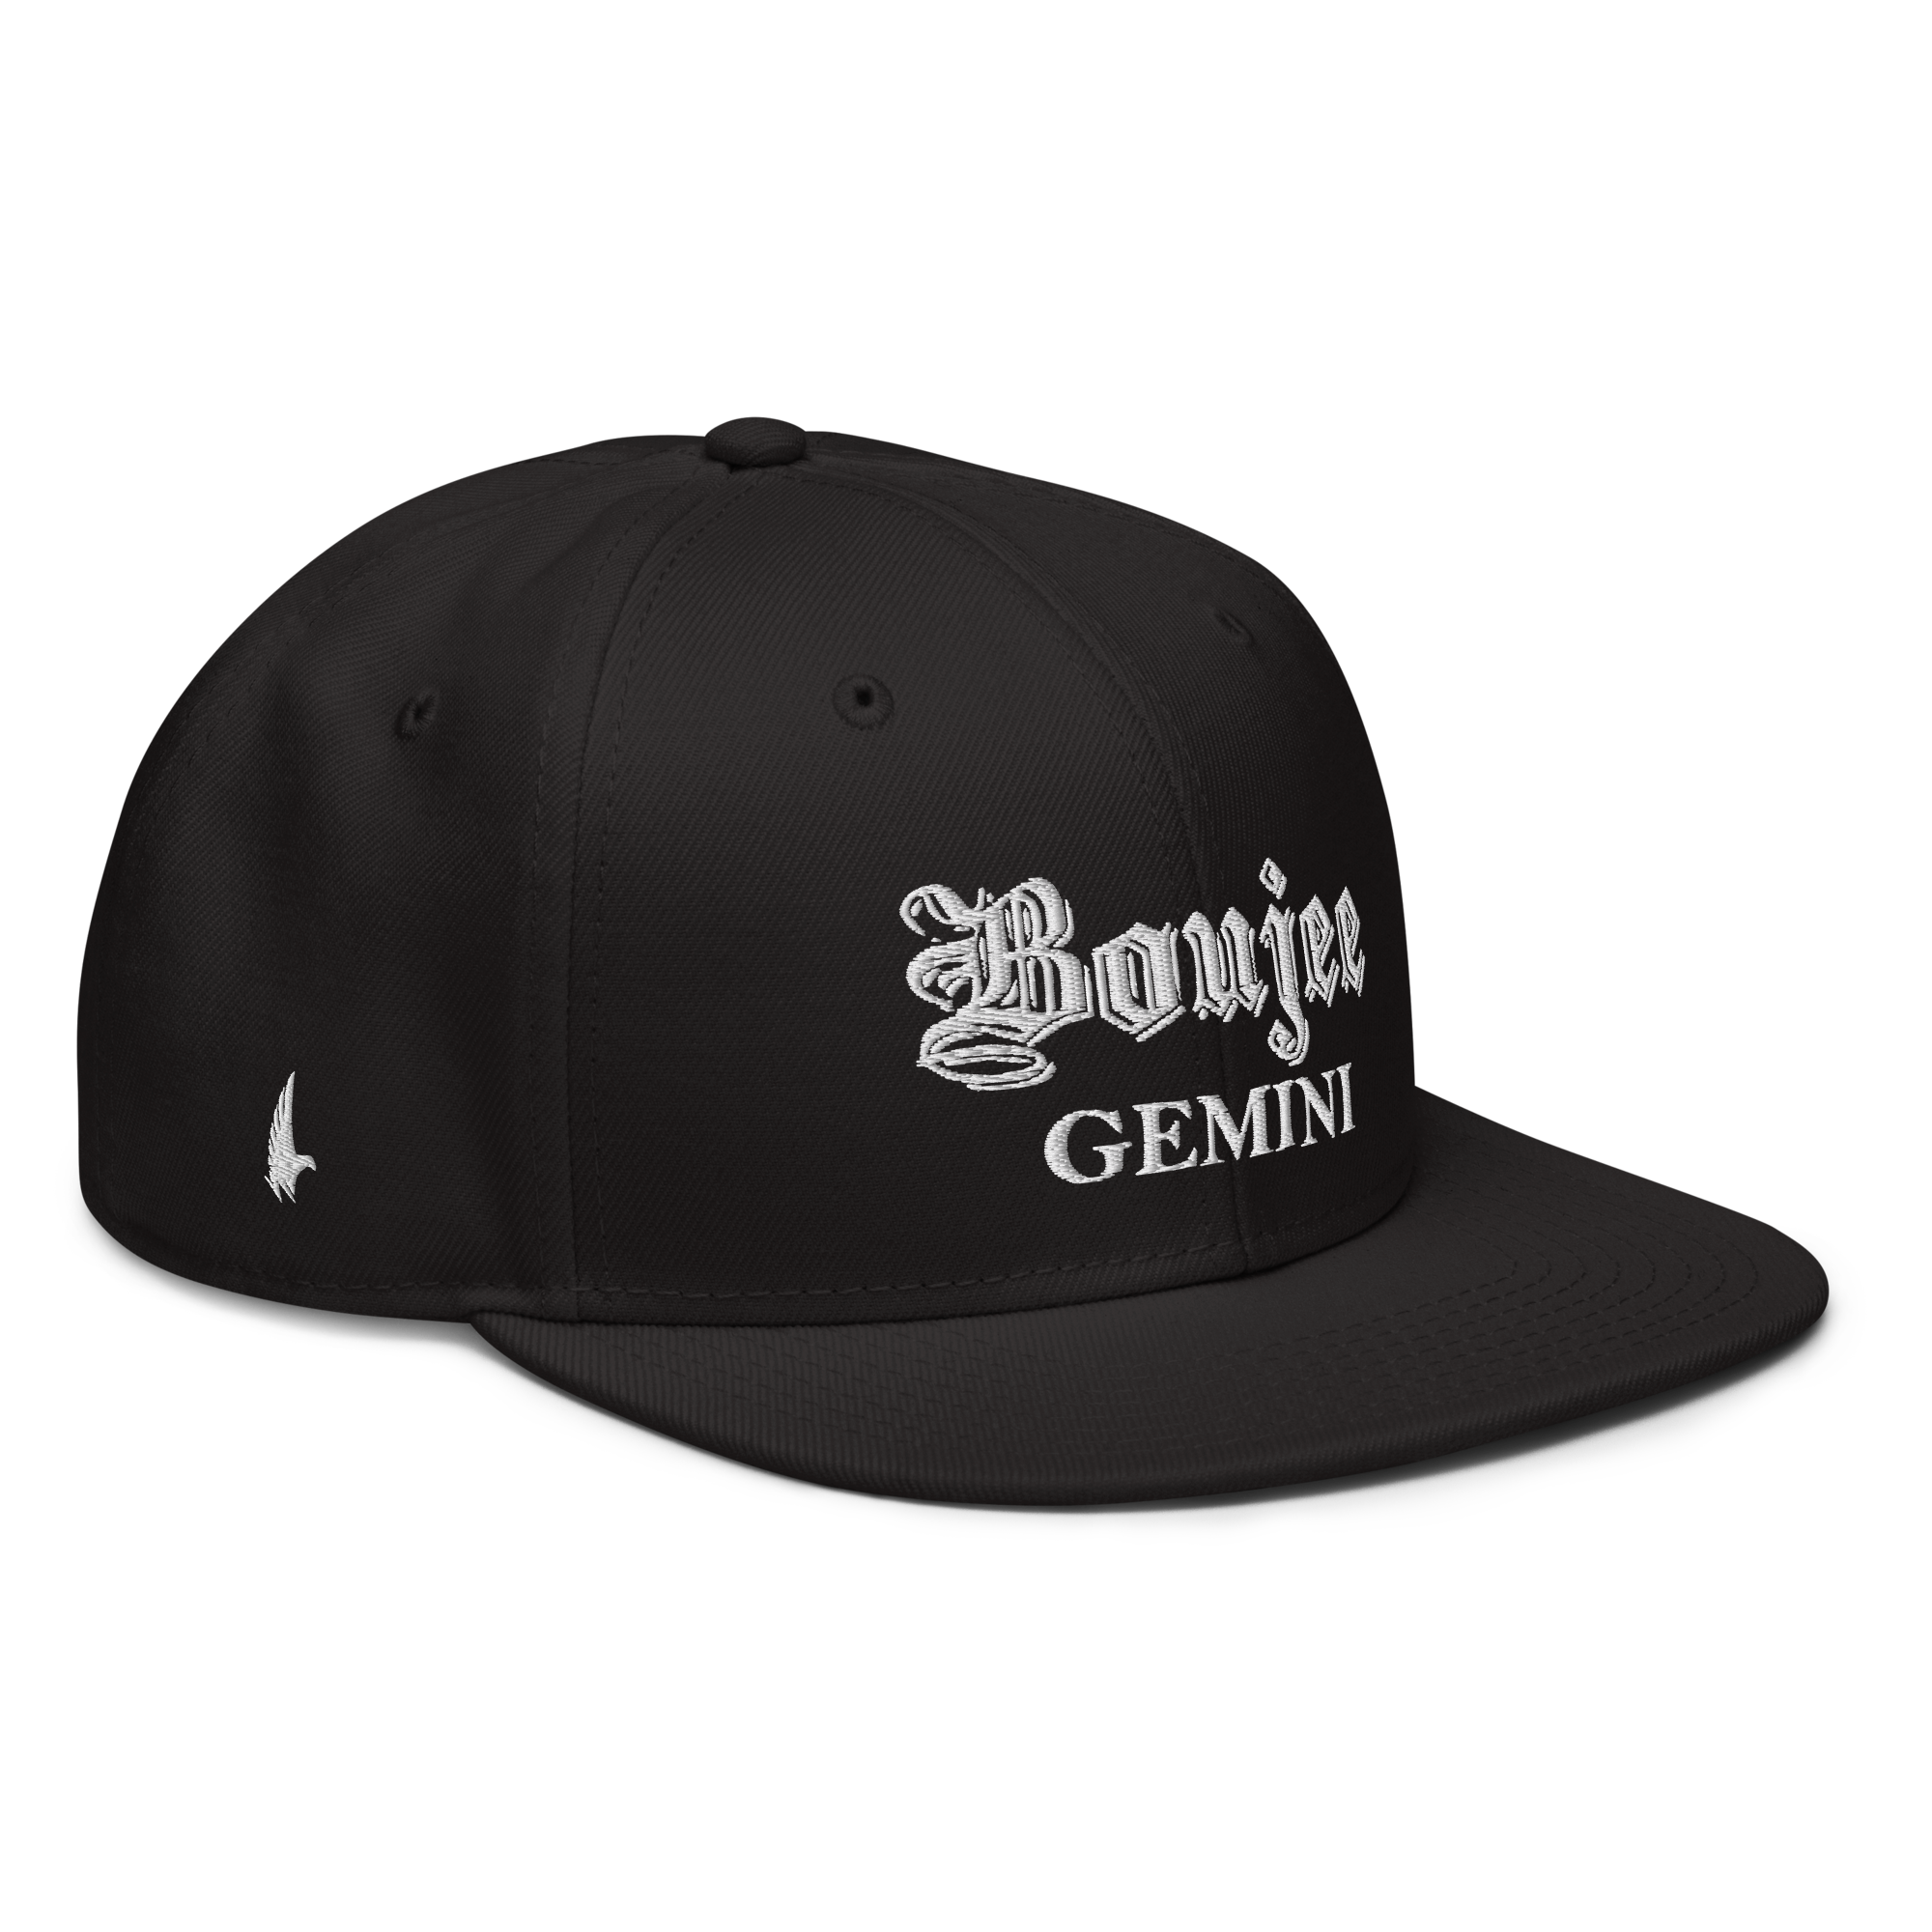 Boujee Gemini Snapback Hat Black - Loyalty Vibes